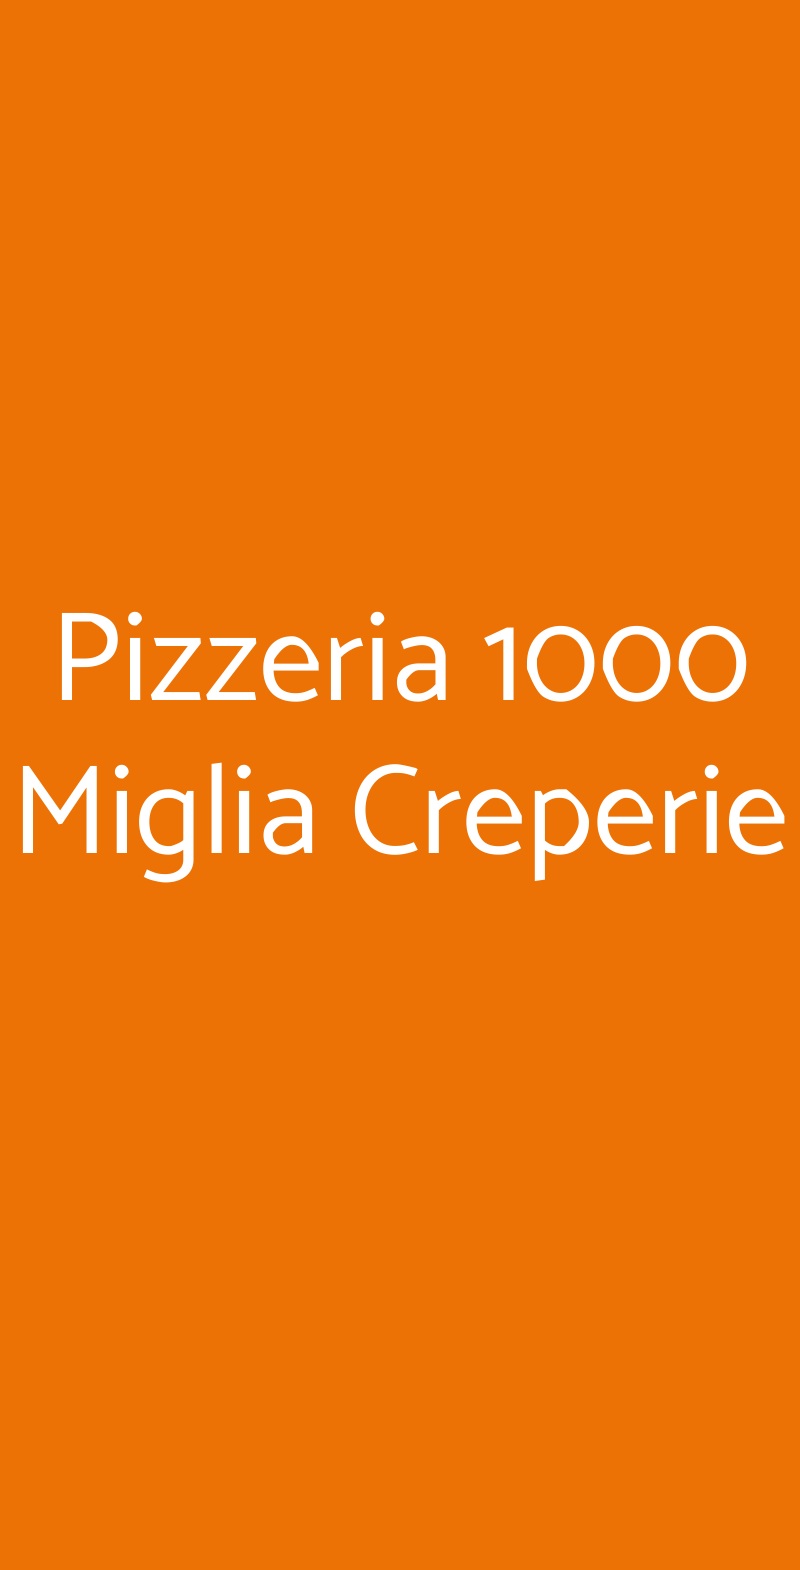 Pizzeria 1000 Miglia Creperie Ferrara menù 1 pagina